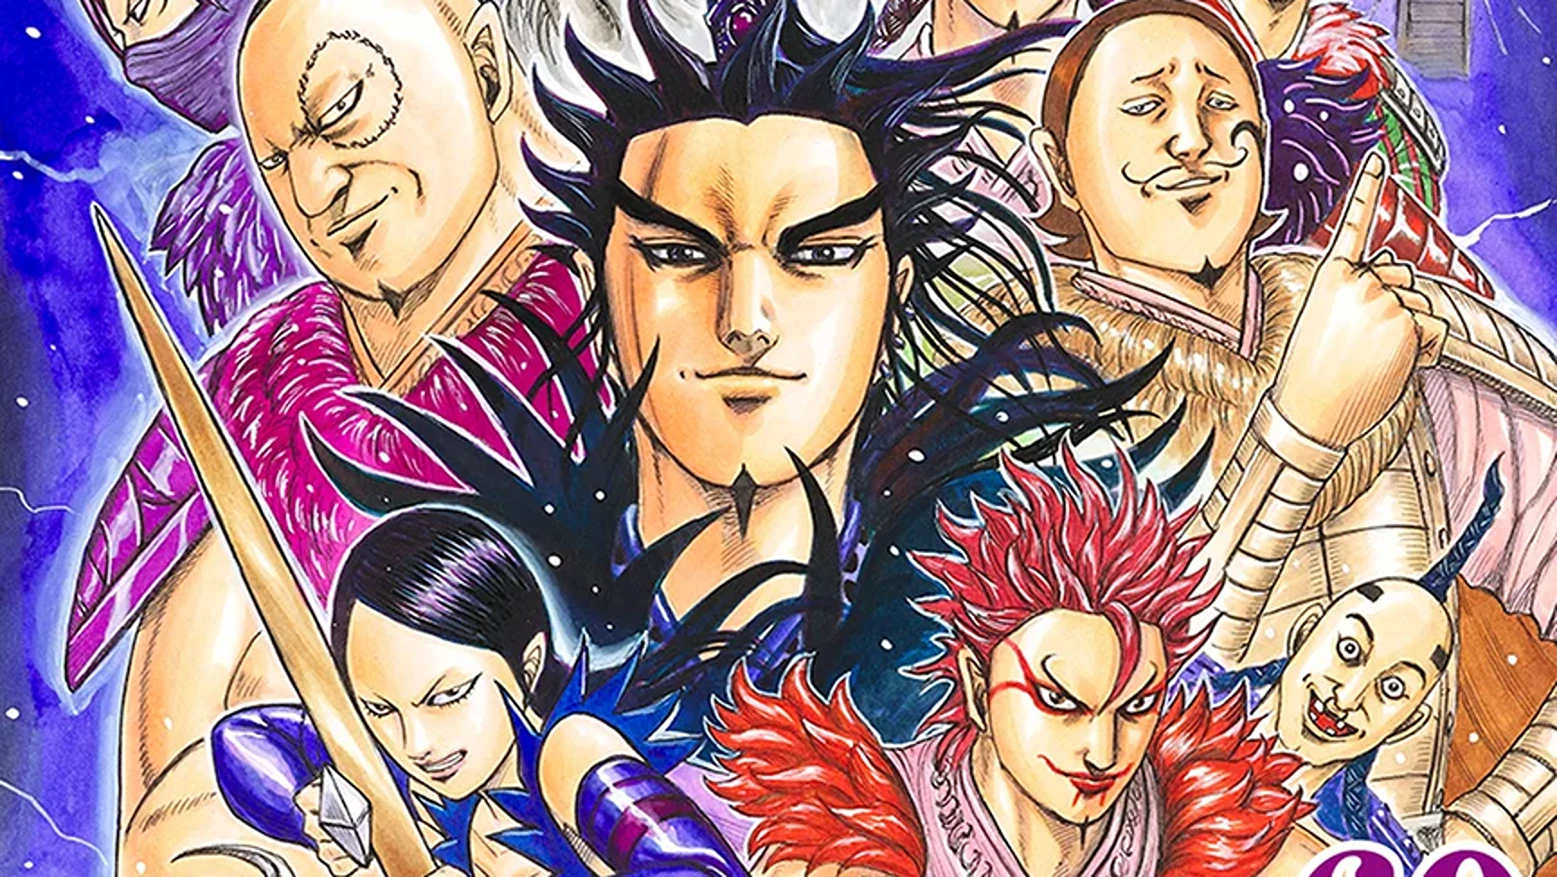 Blue Lock becomes the best-selling Manga of 2023, surpassing Manga like One Piece & Jujutsu Kaisen